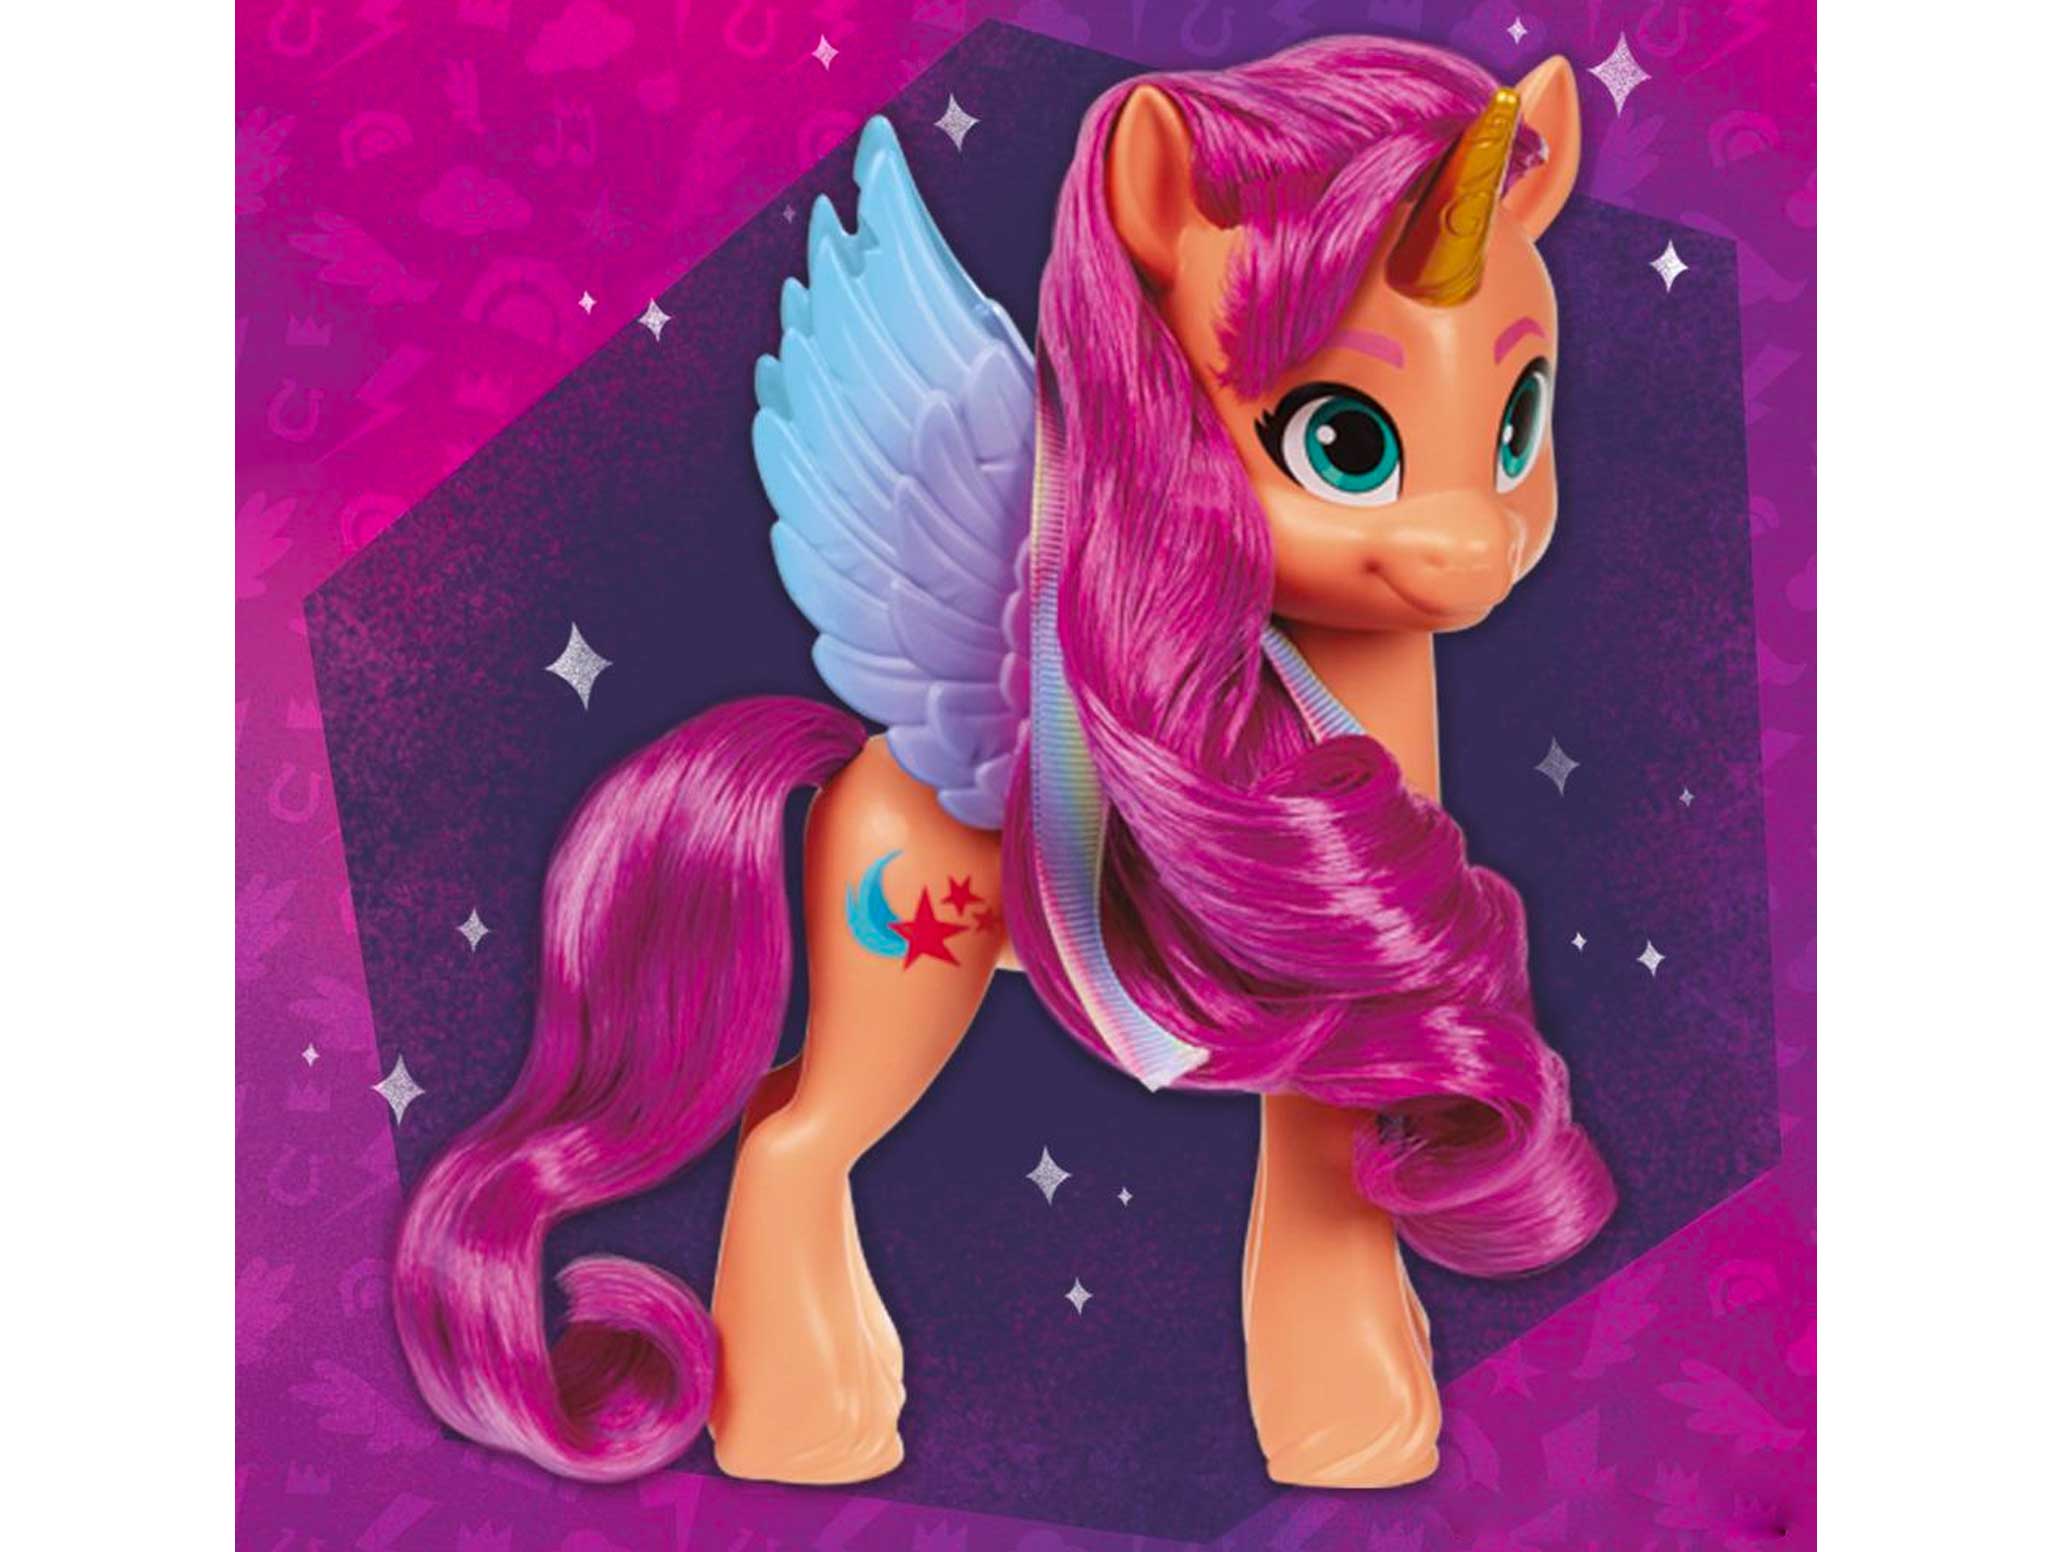 My Little Pony A New Generation: Sunny Starscout Peinados Con Estilo